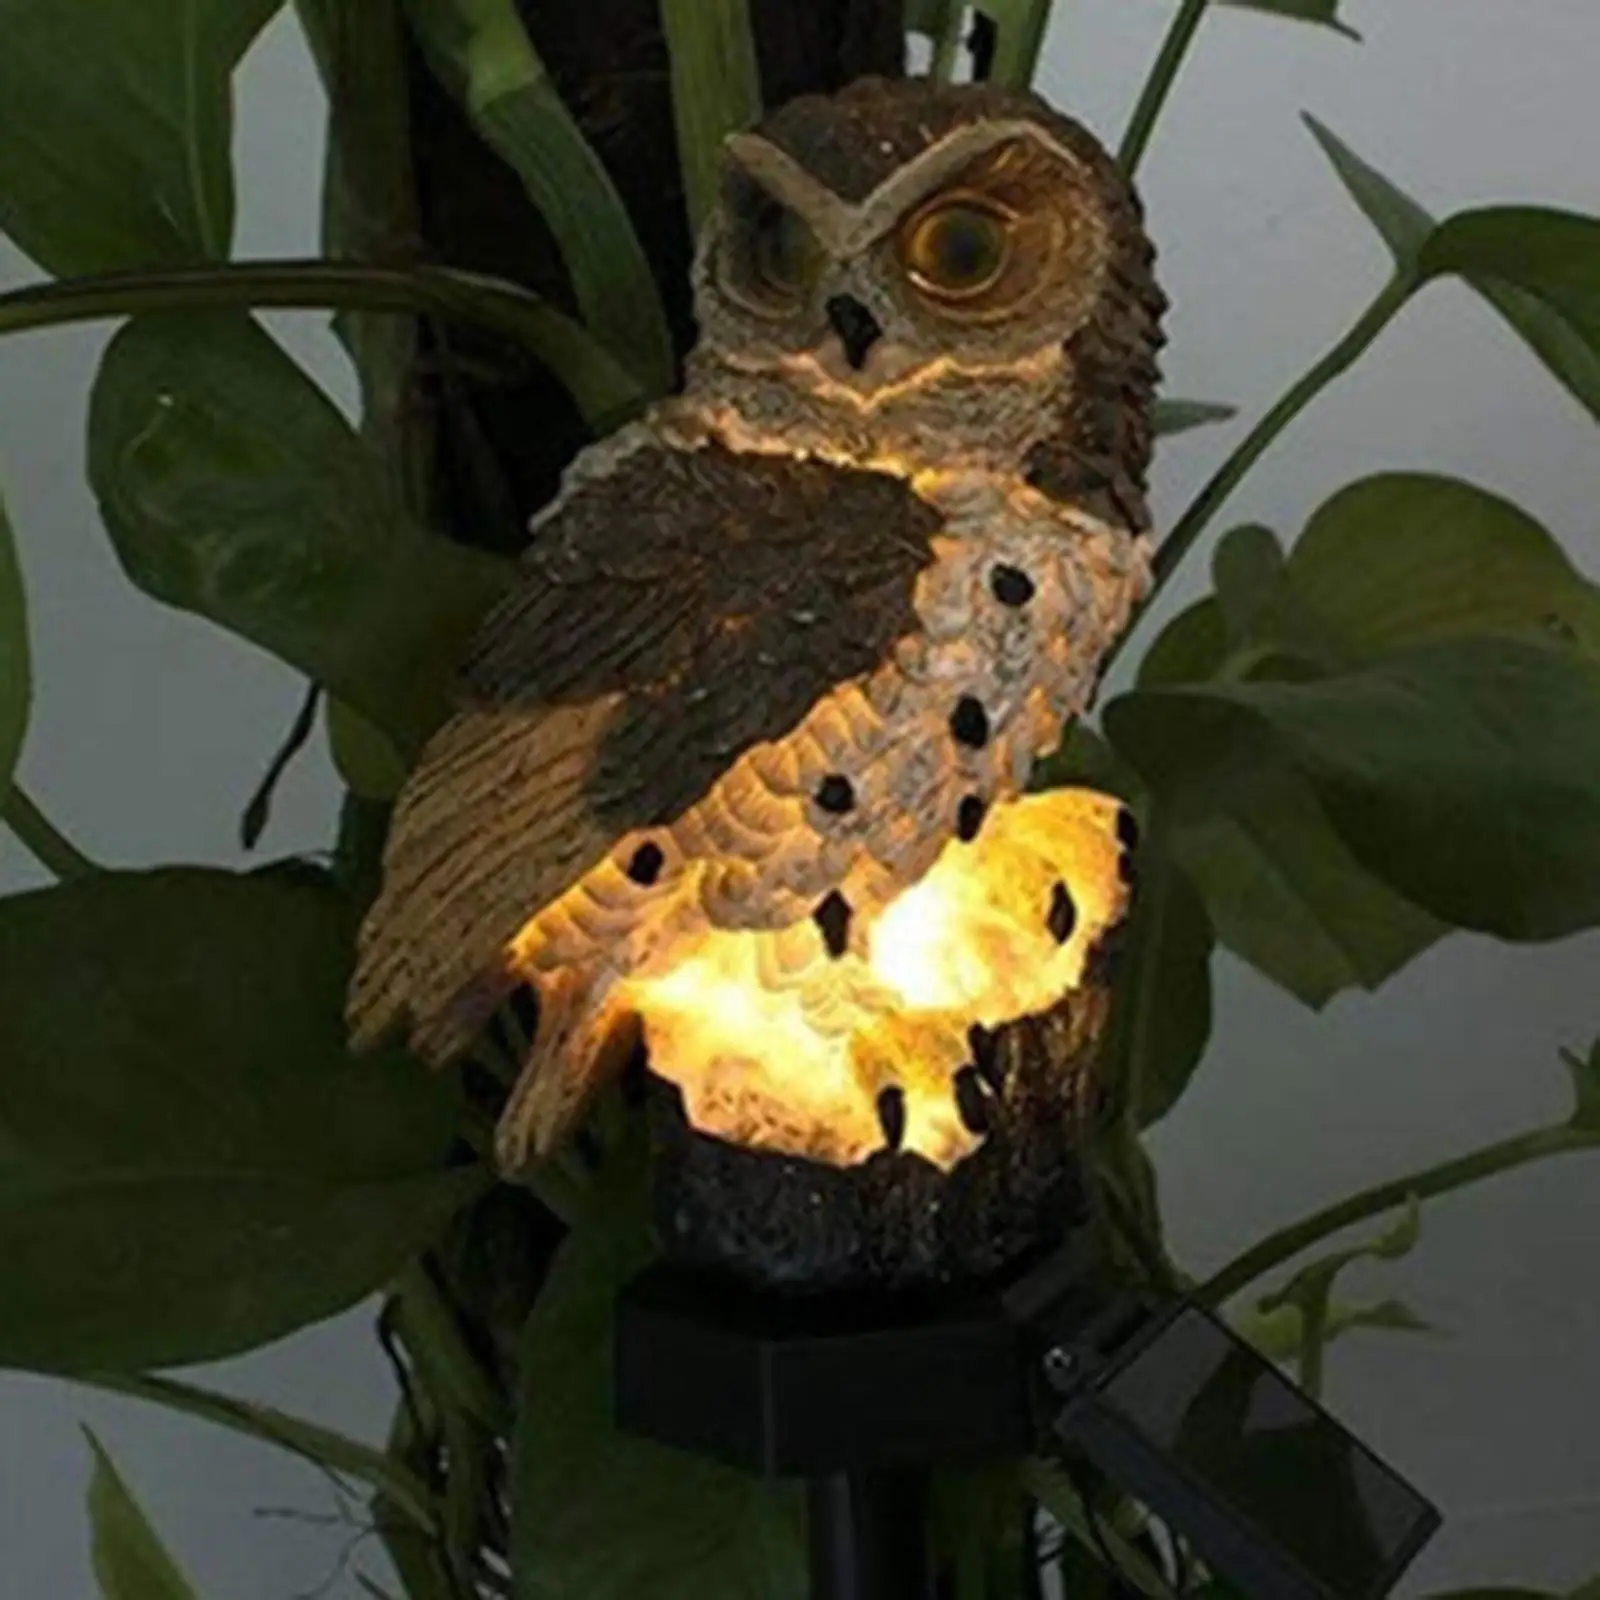 , Garden Lamp IP65 Waterproof Owl Solar LED Lights Landscape Lamp Stake Light, for Outside Wedding Walkway Pathway Ornaments